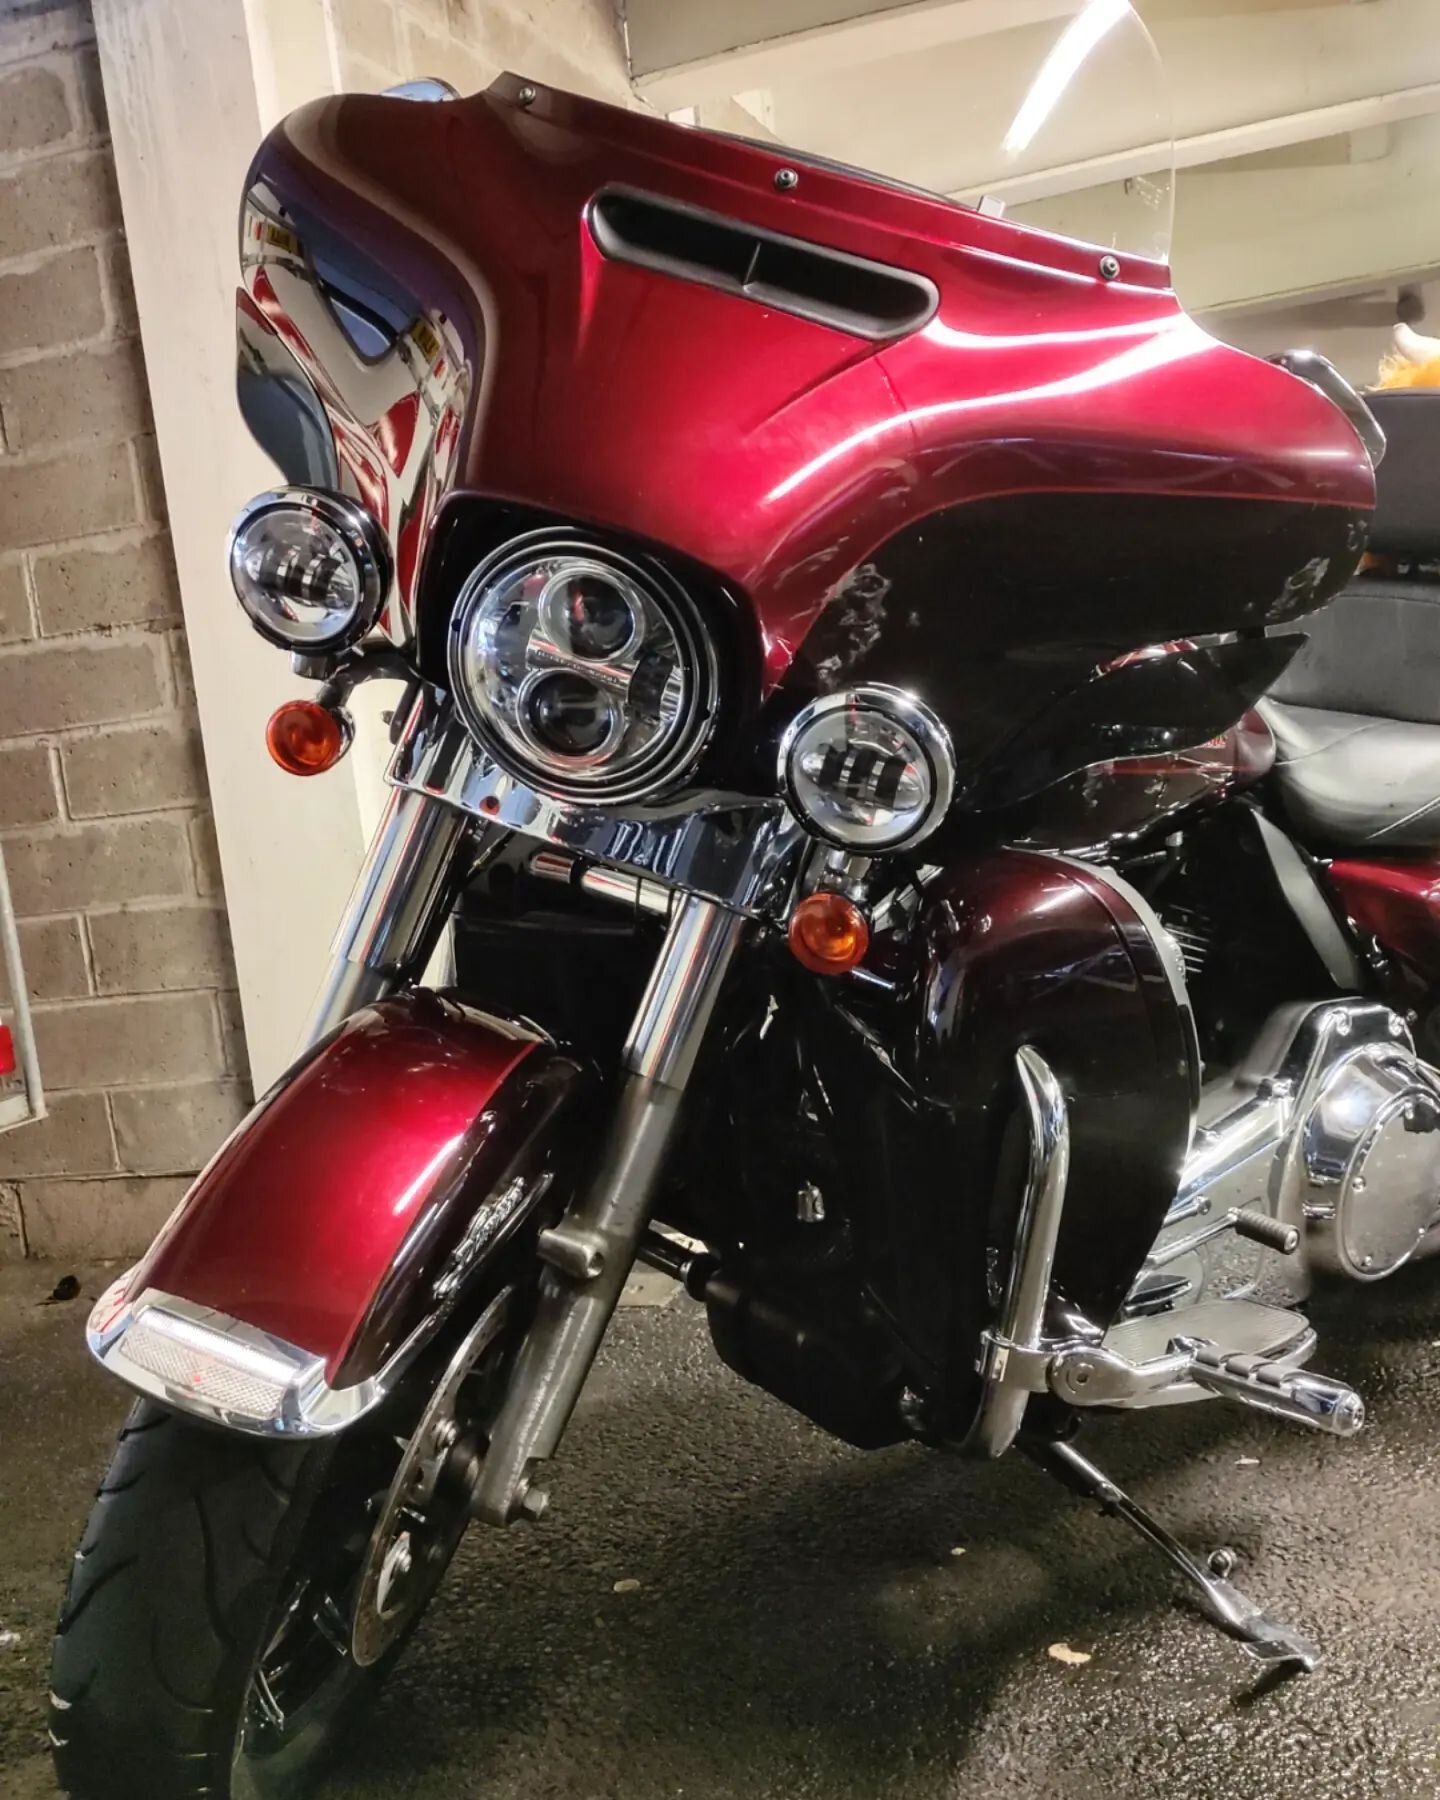 Fantastic colour scheme on this Harley Electra glide. Love the wee front fender light.
. 
.
.
.
#harley #harleydavidson #electraglide #harleyelectraglide #heritage #harleychrome#harleydavidsonmotorcycles#motorcycledetailing #detailing #valeting #moto